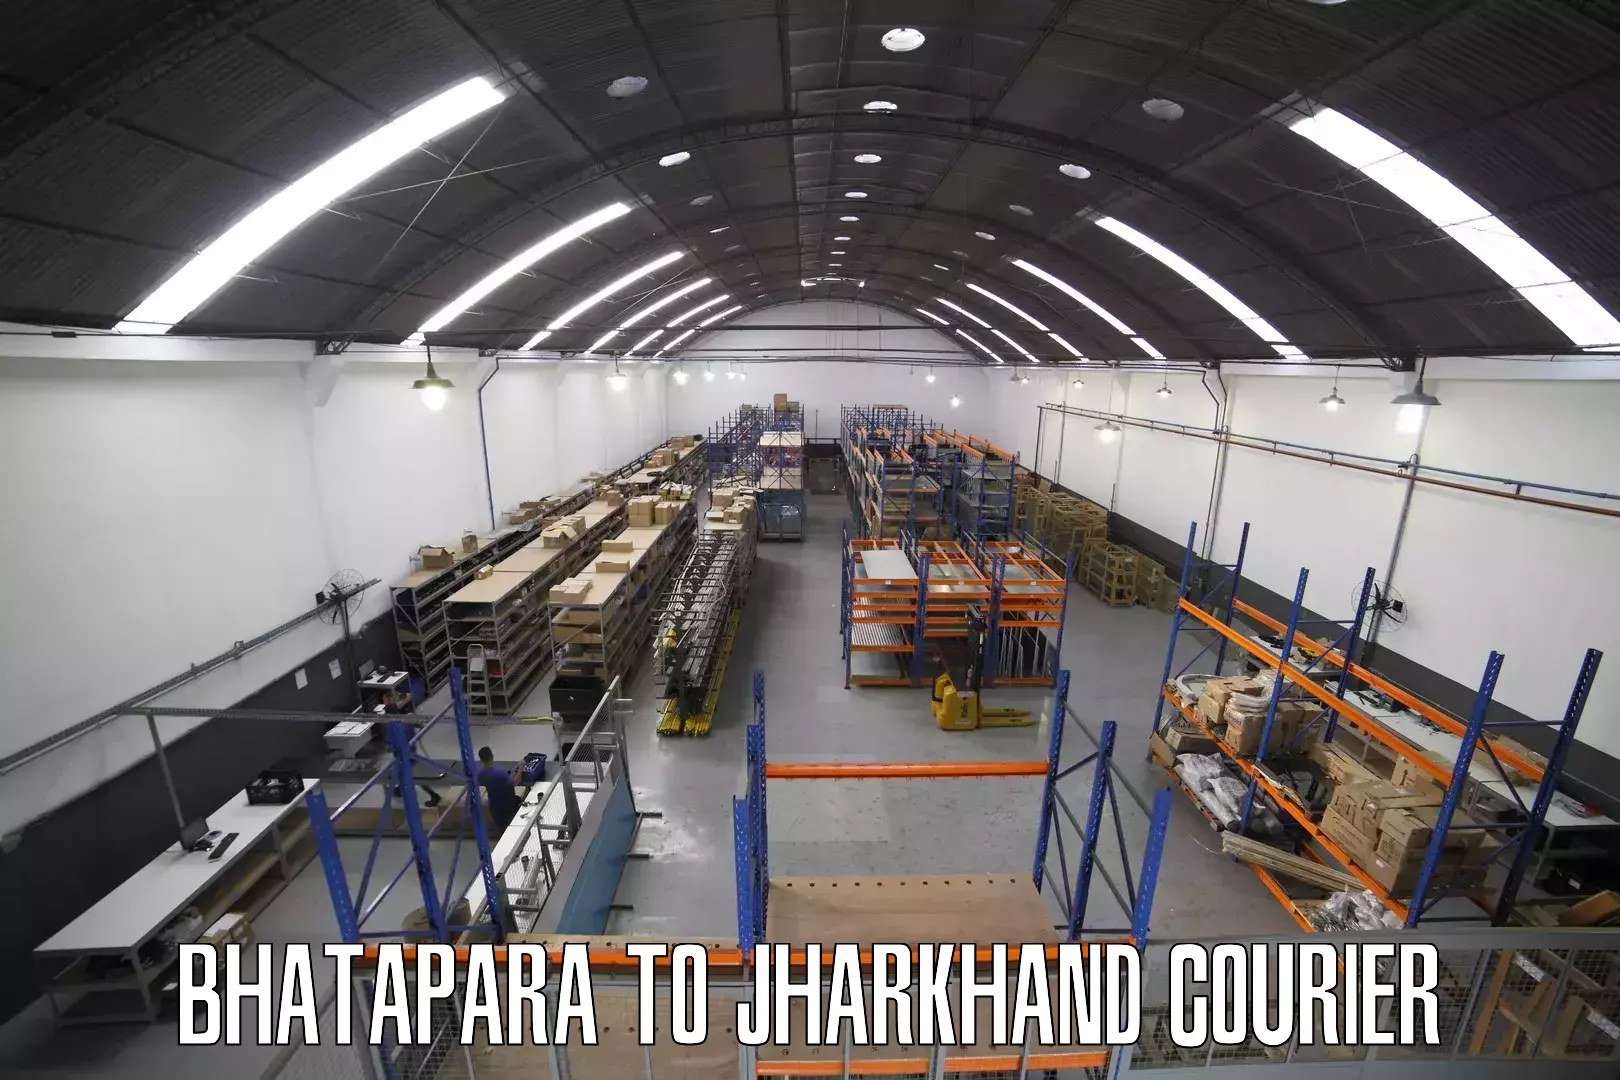 Quality courier partnerships Bhatapara to Latehar